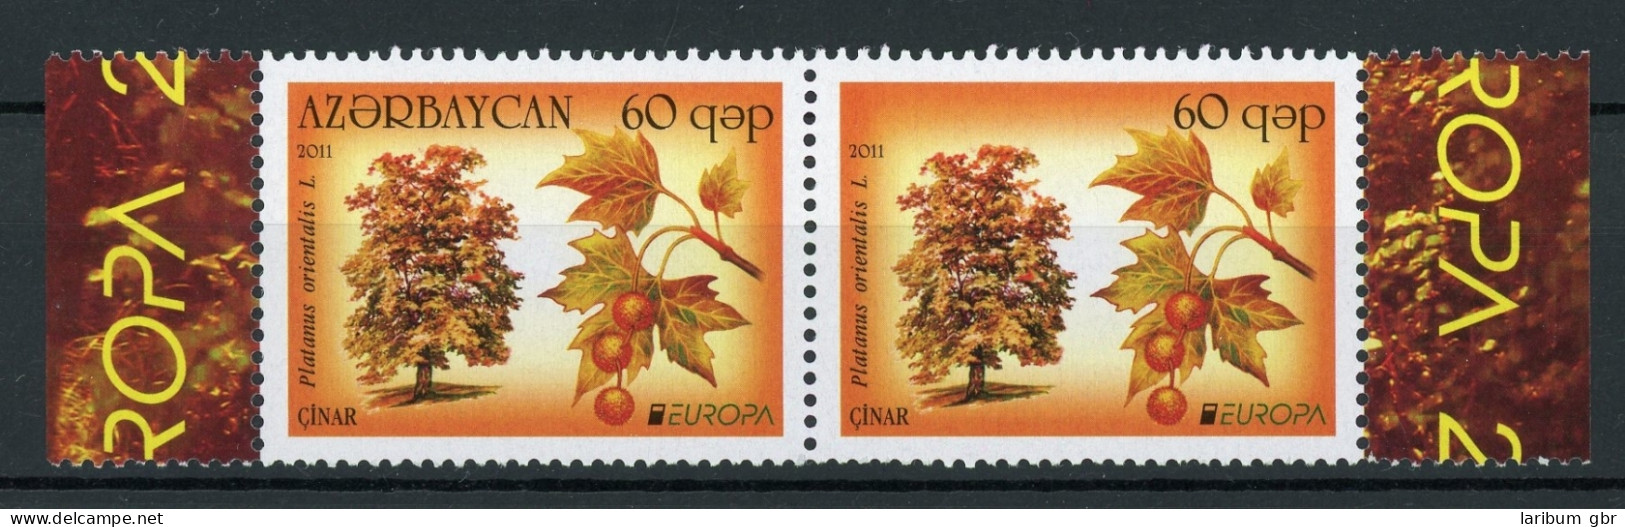 Aserbaidschan 841 I Postfrisch Fehlender Landesname, CEPT #HE030 - Azerbaïjan